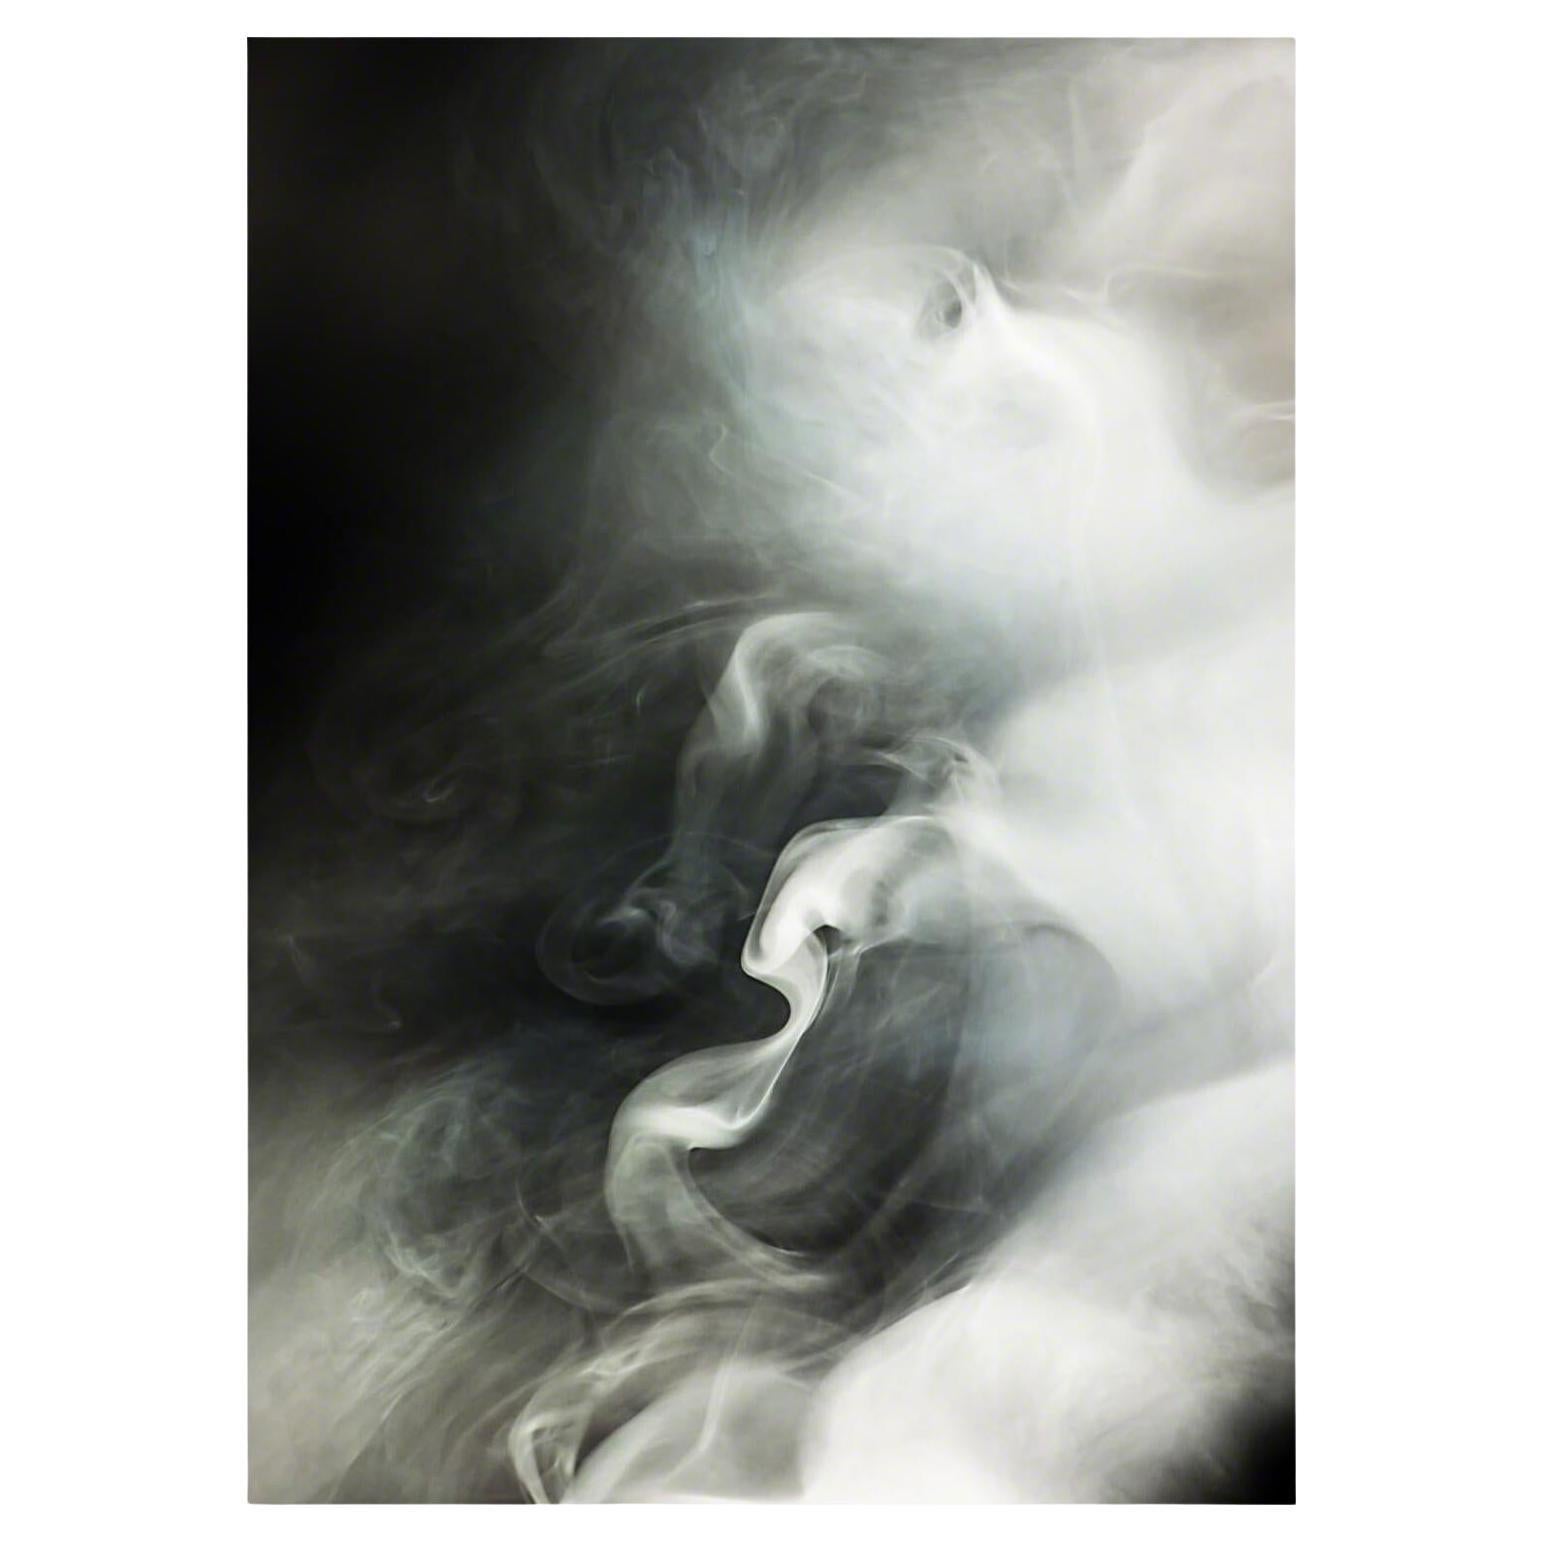 Daniele Albright, "Smoke and Mirrors 11", Art, 2014